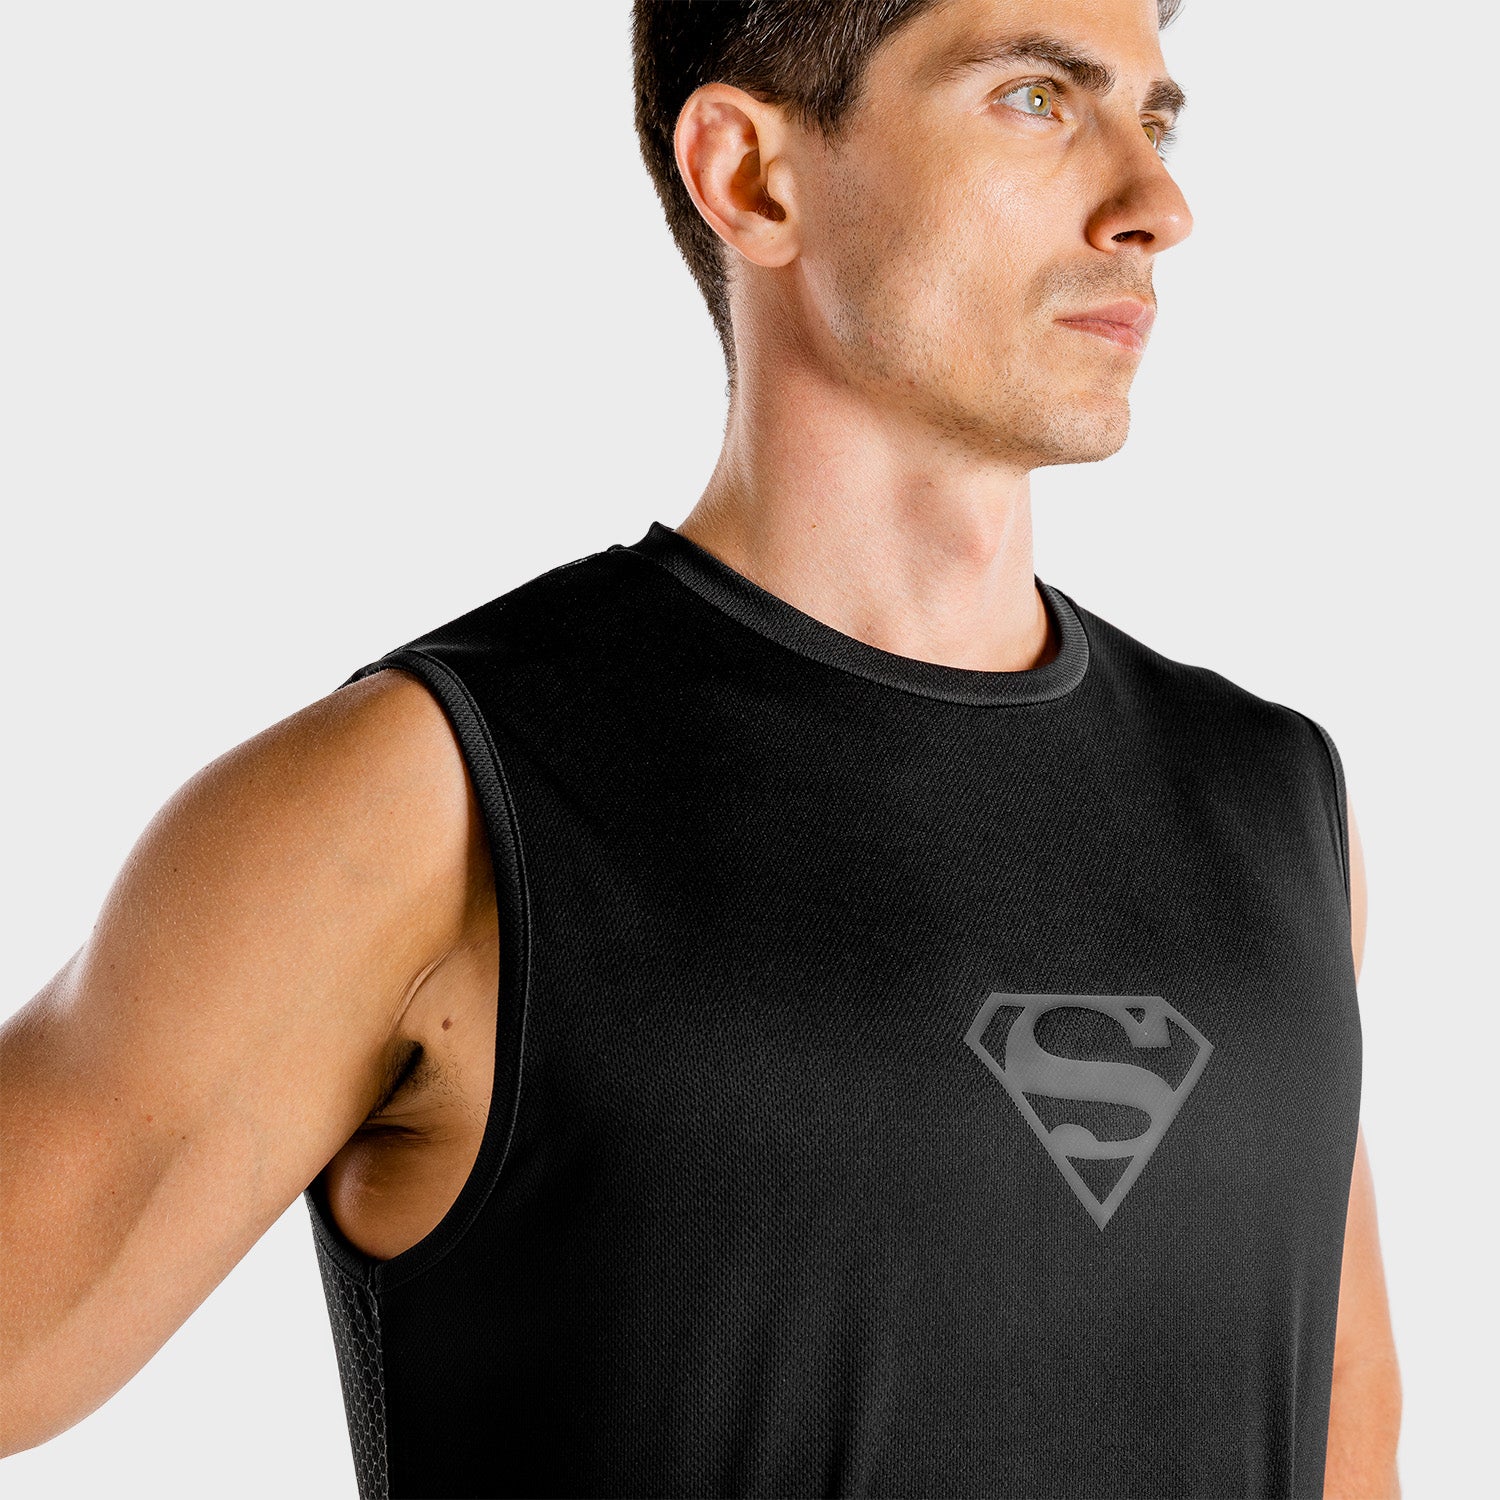 squatwolf-workout-tank-tops-for-men-superman-gym-tank-black-gym-wear